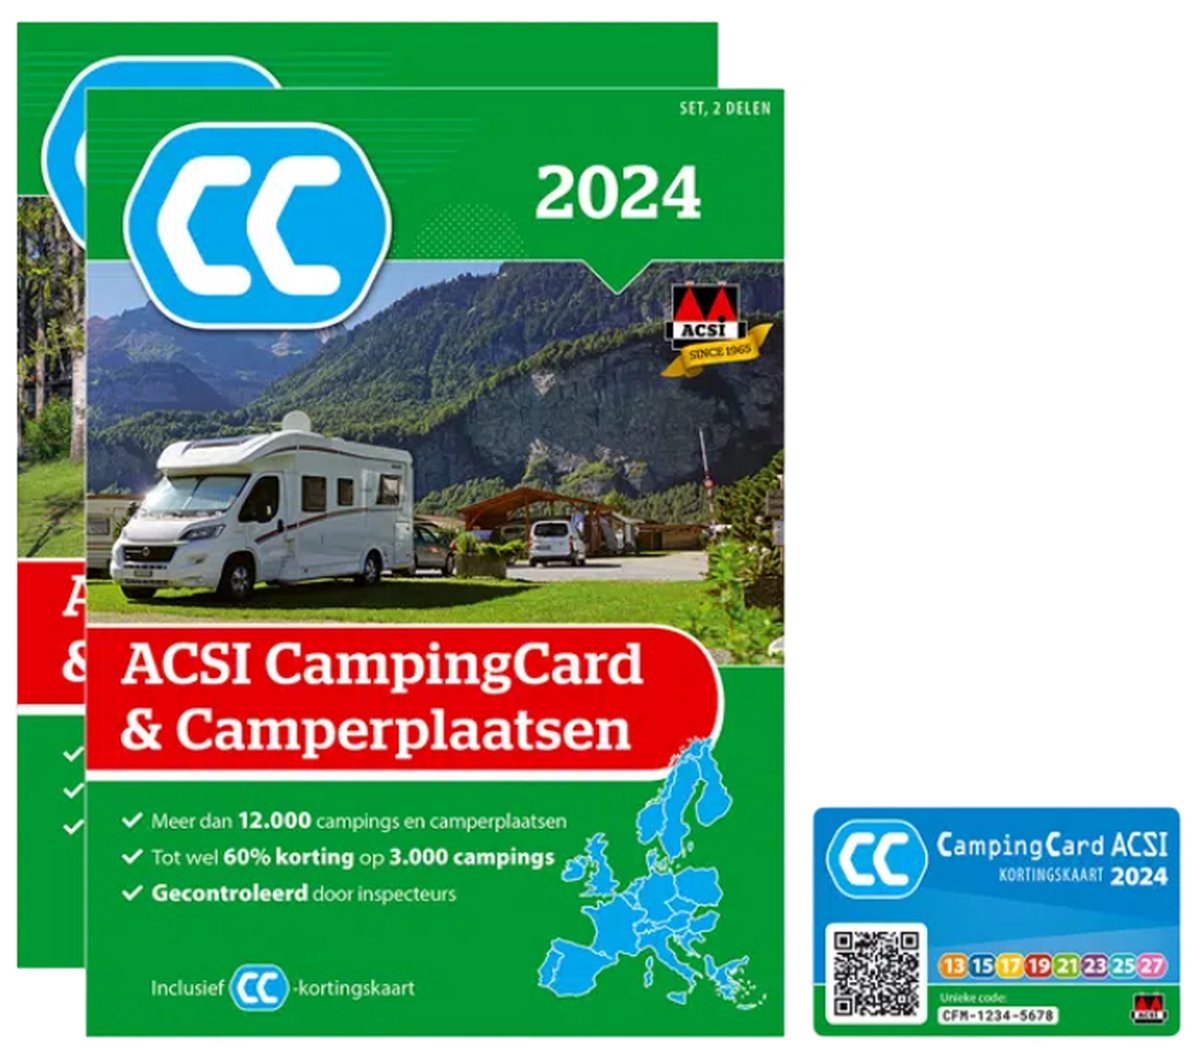 ACSI Campinggids - CampingCard & Camperplaatsen 2024 - Acsi